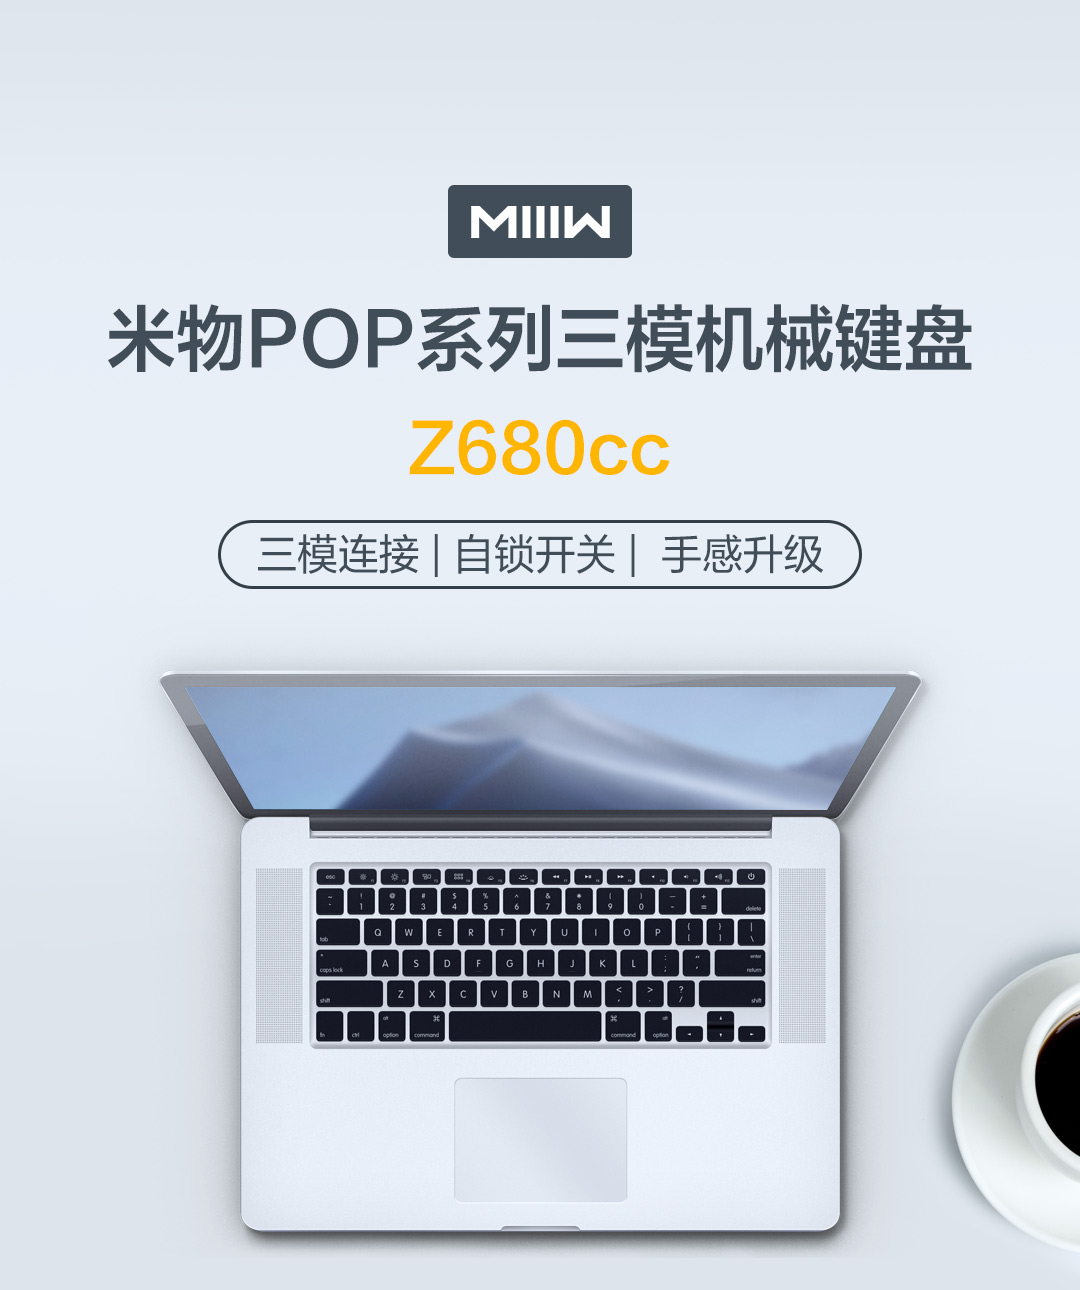 MIIIW米物POP系列Z680cc机械键盘 68键办公电竞游戏键盘 有线/无线/蓝牙三模连接 佳达隆青轴